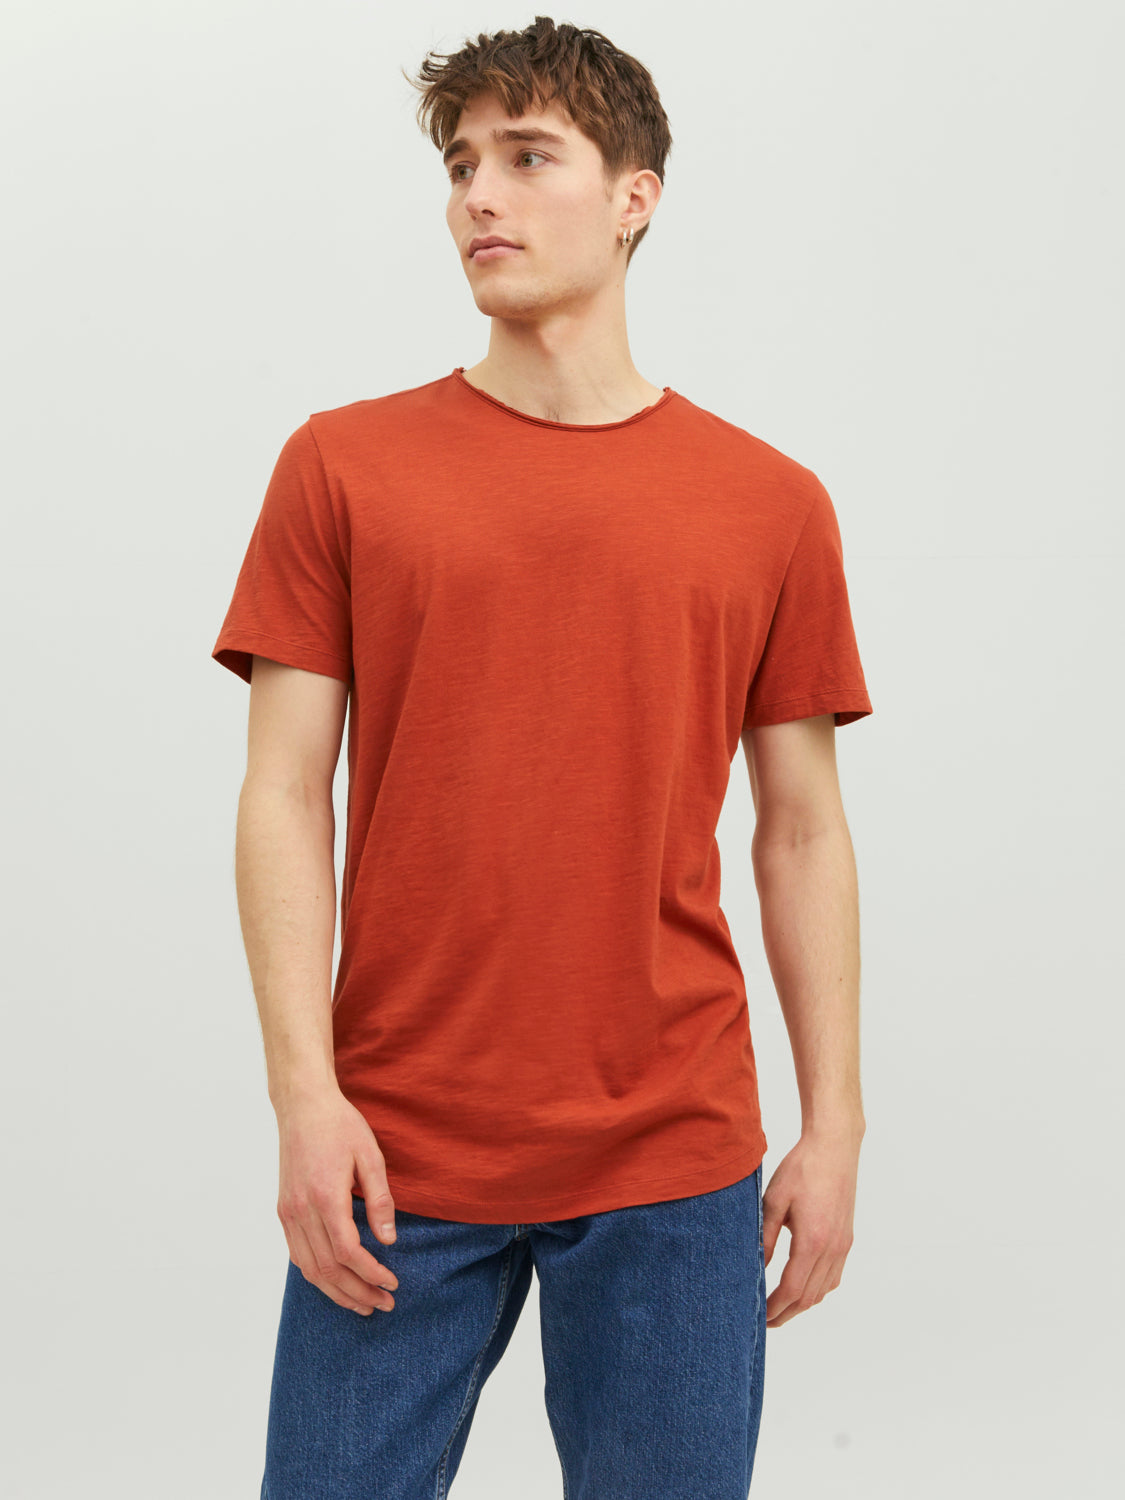 Camiseta de manga corta básica naranja - JJEBASHER